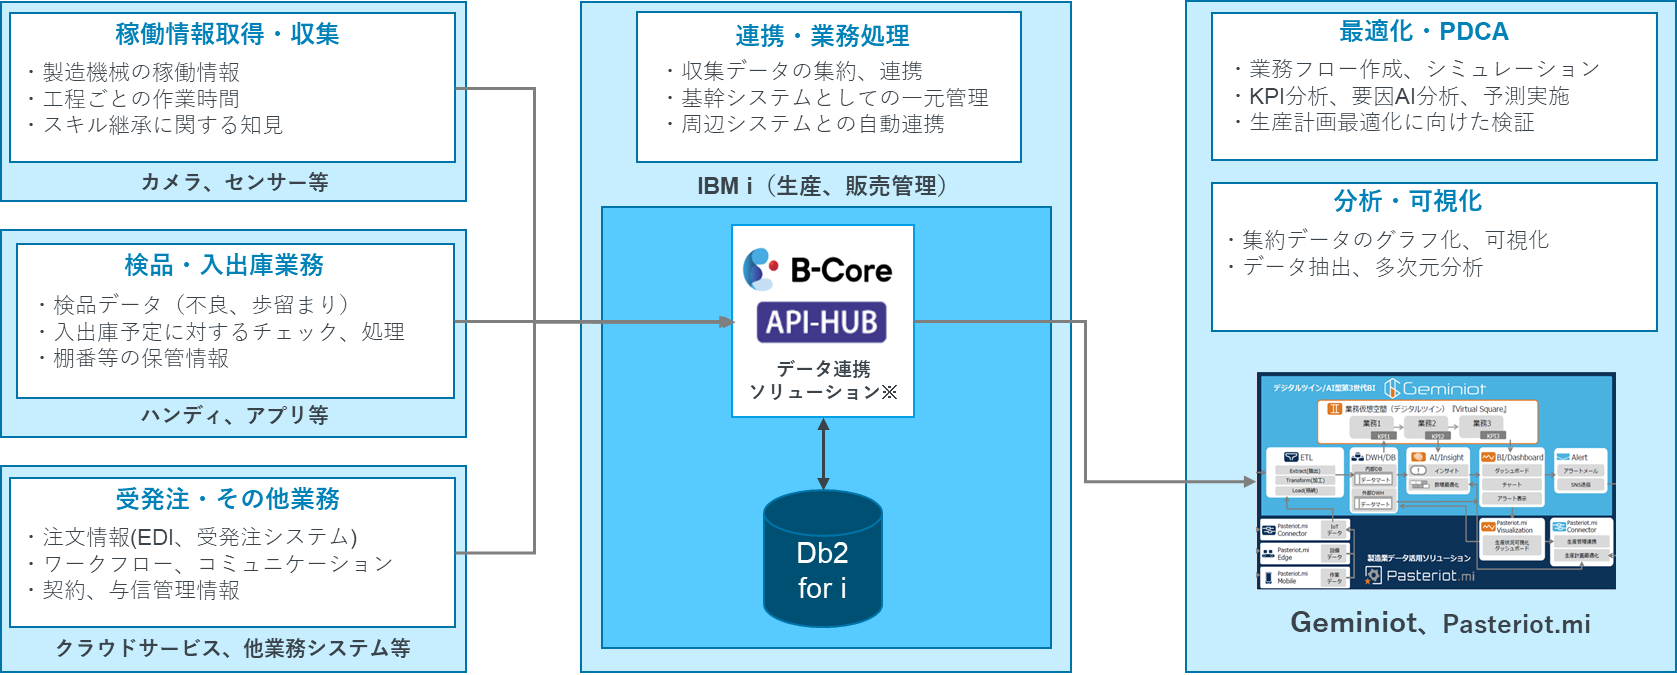 B-Core API-HUBデータ連携ソリューション